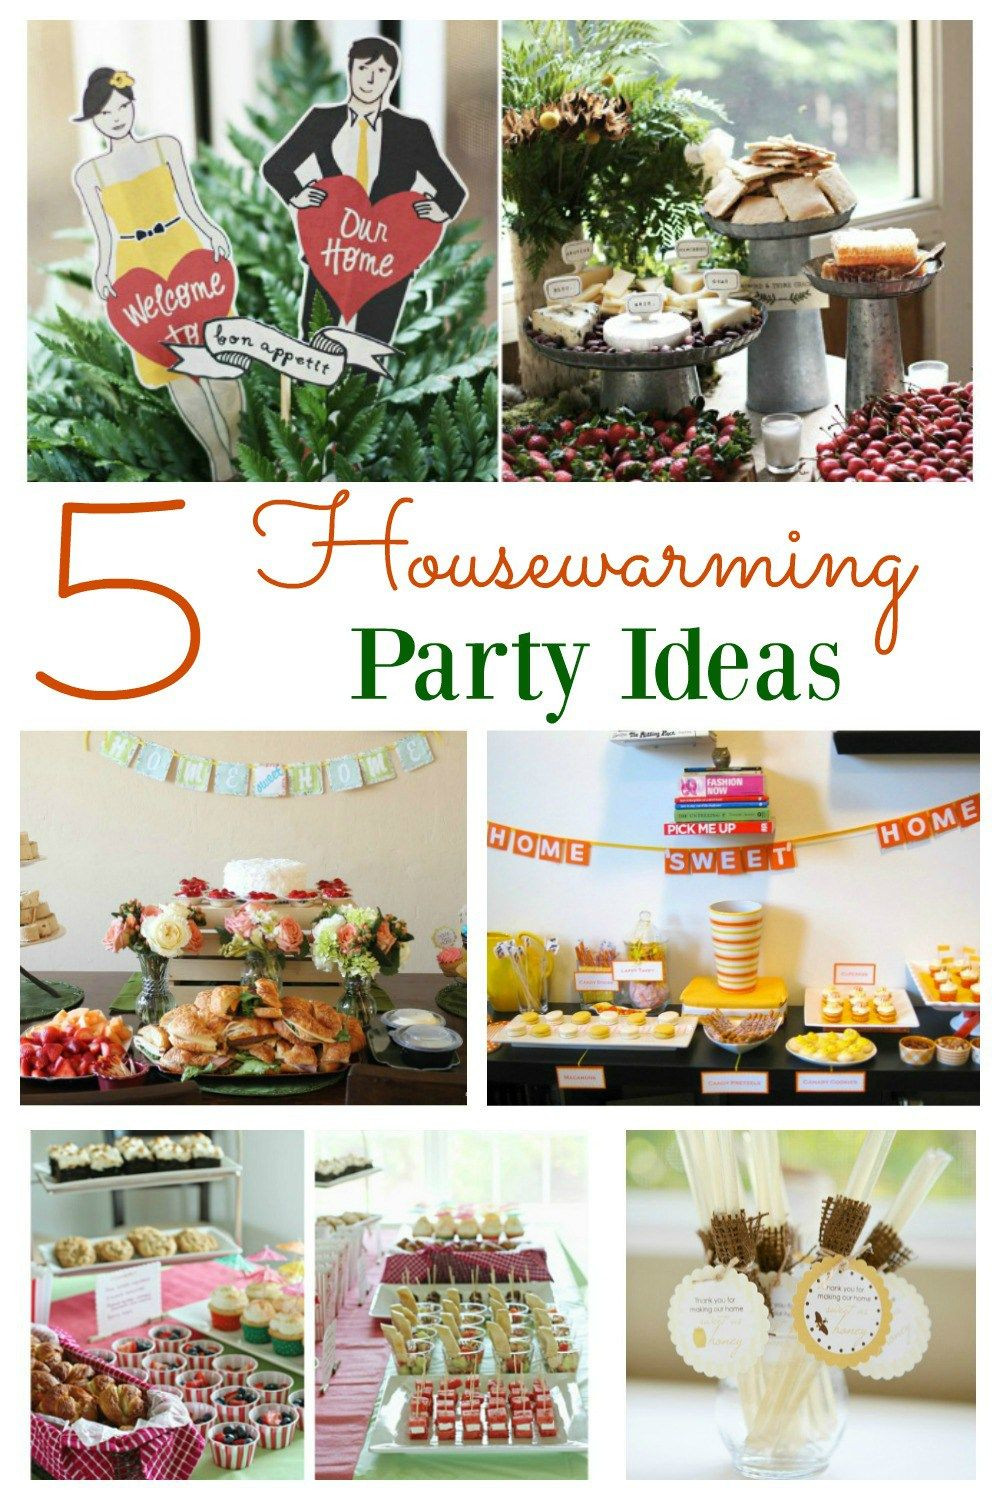 Summer Housewarming Party Ideas
 The Best Housewarming Party Ideas To Make You Feel At Home